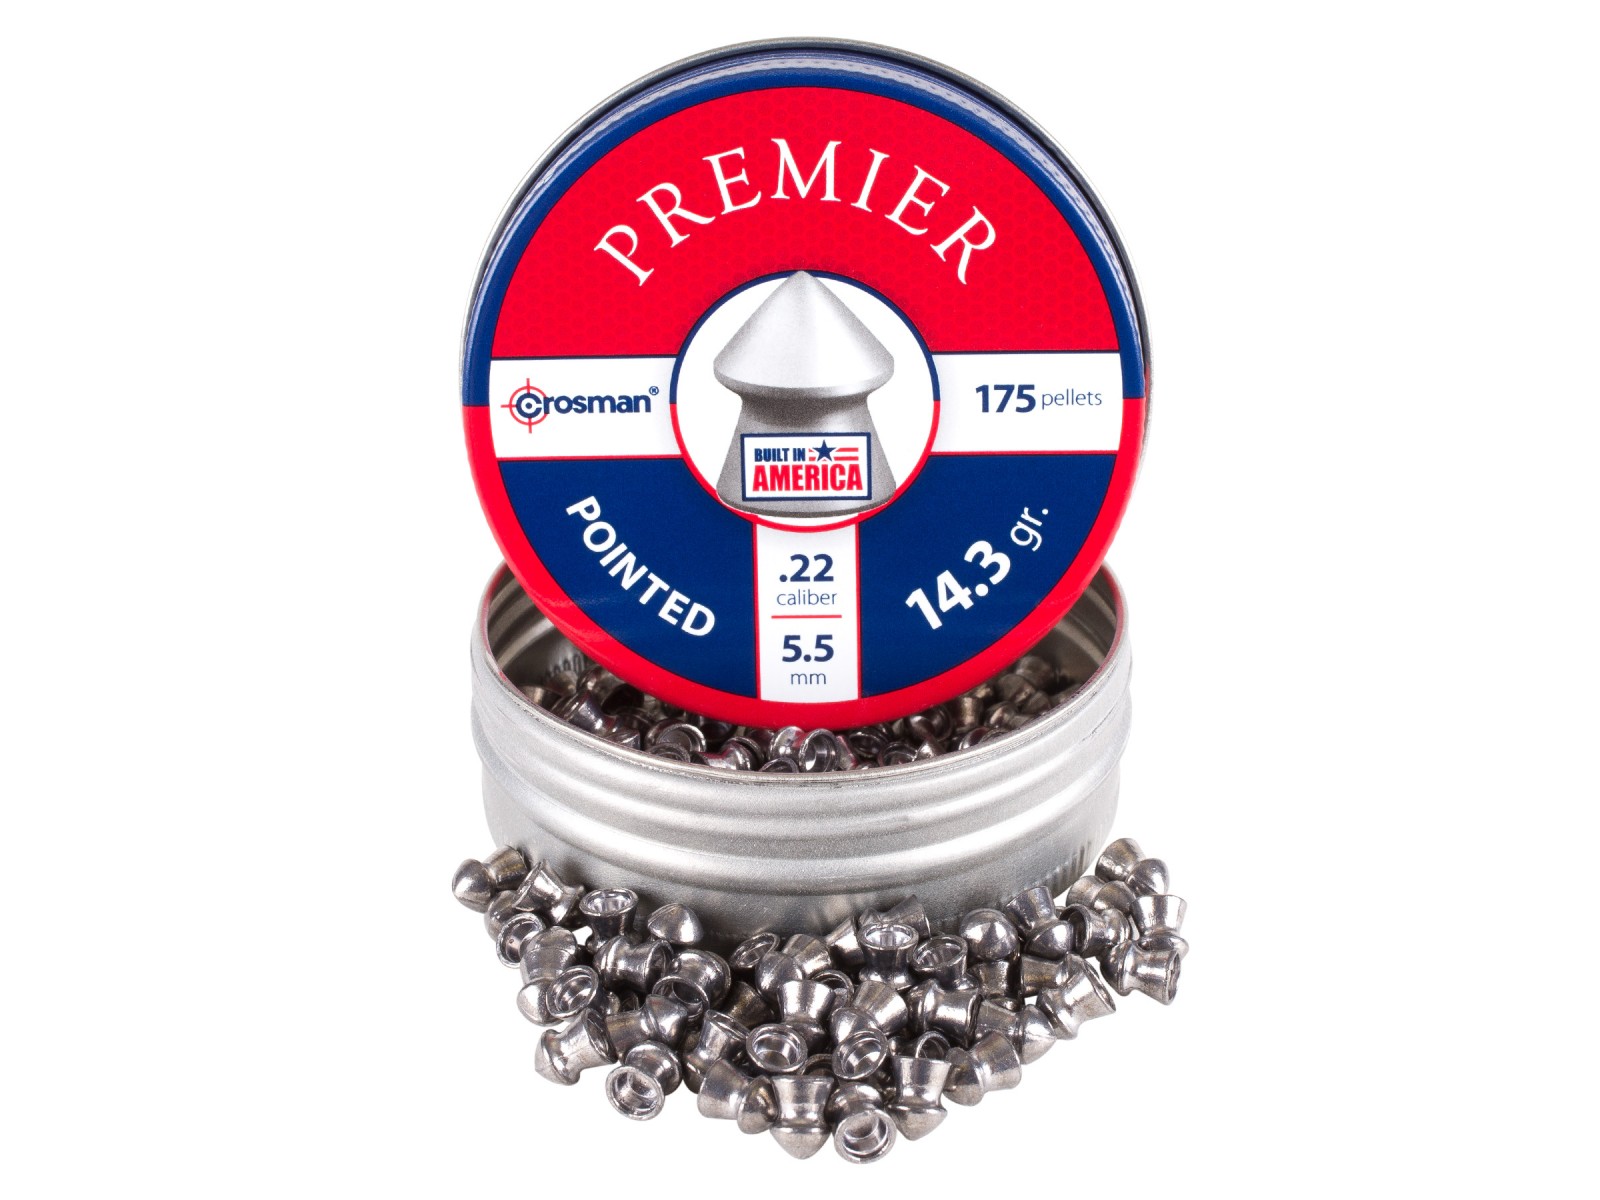 5.5 mm 14.3 gr x 100 sample pack Crossman premier piranha airifle pellets .22 